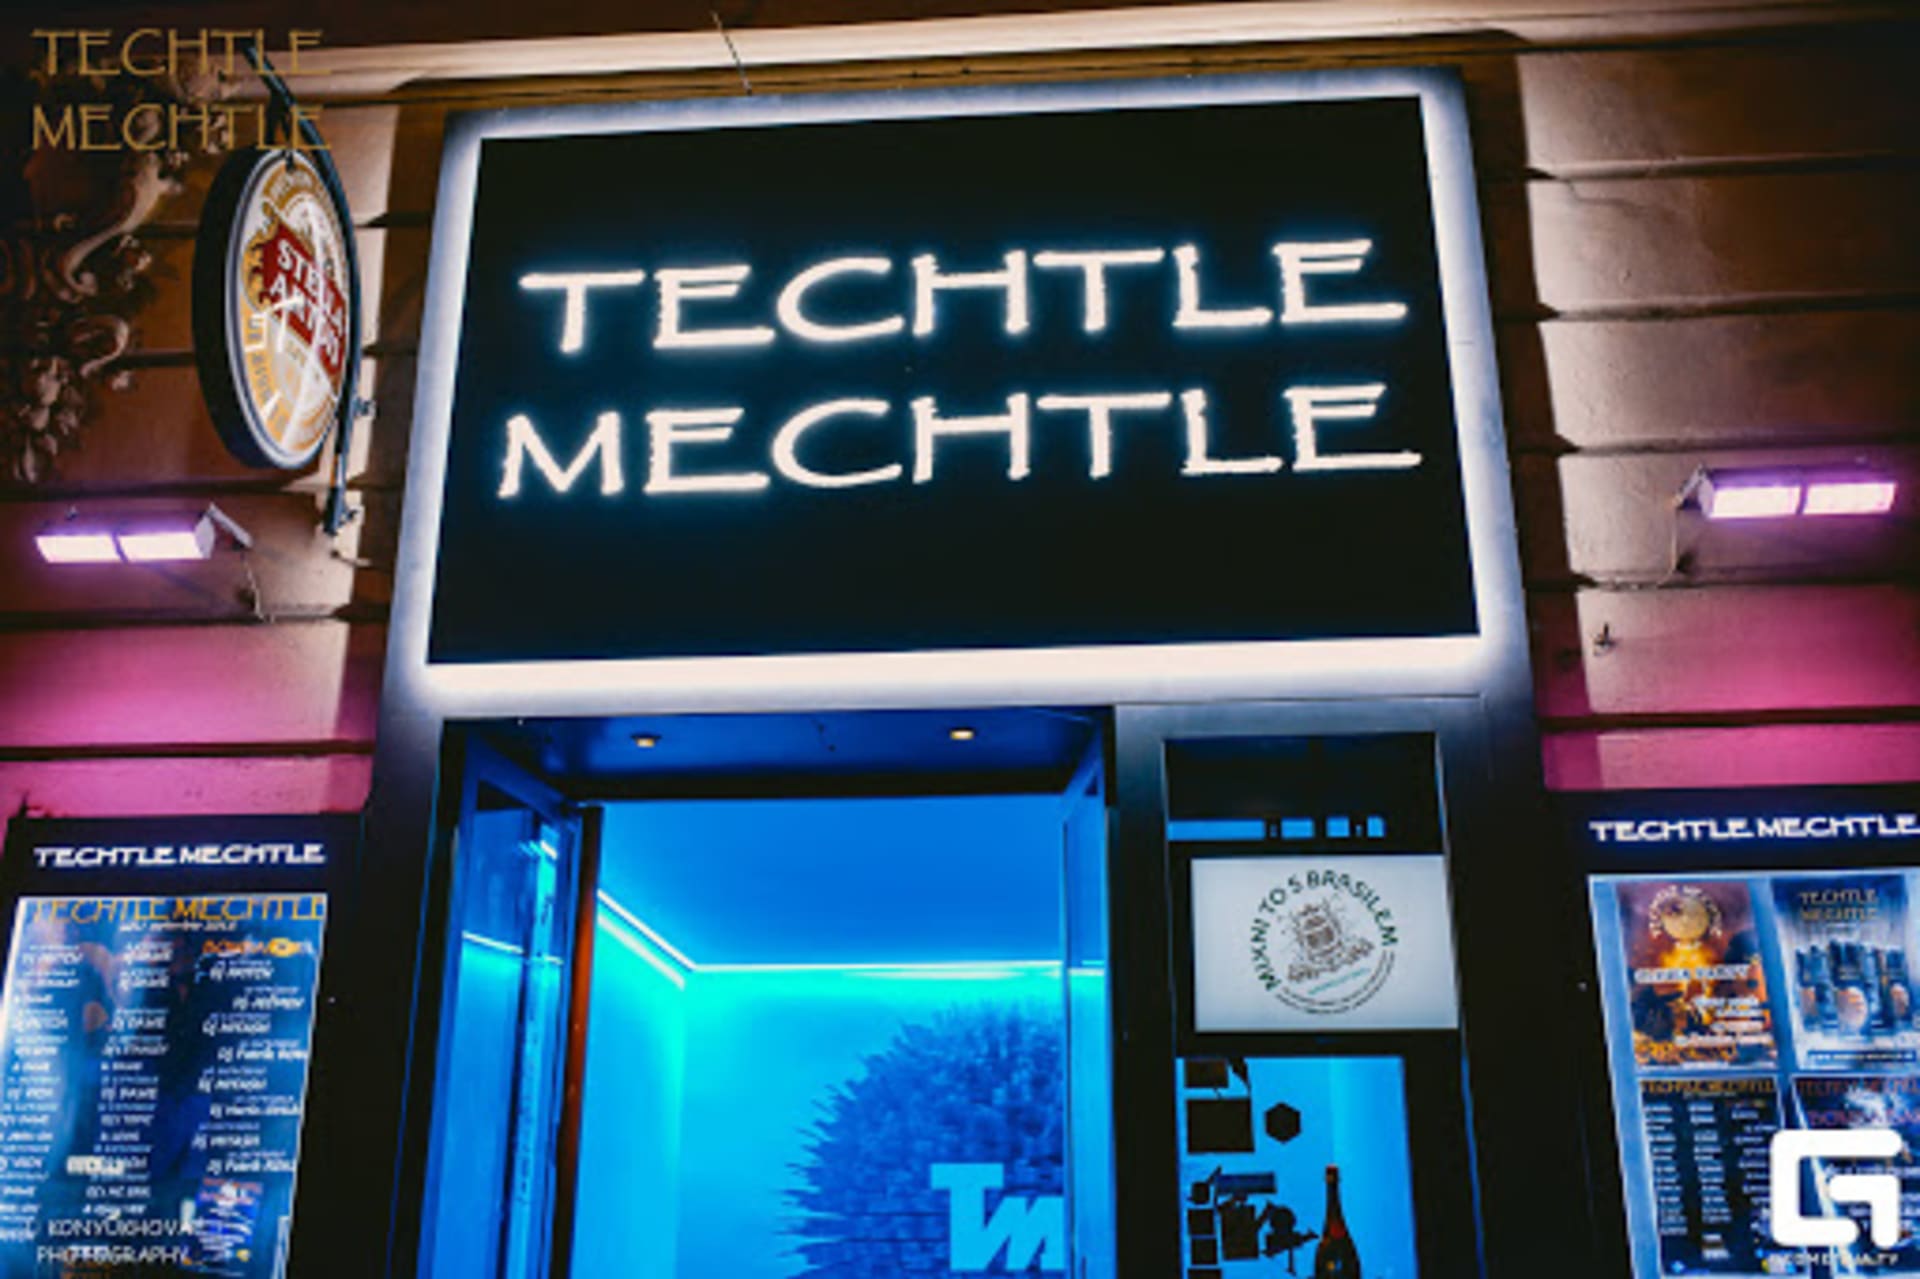 V baru Techtle Mechtle se nakazili lidé.